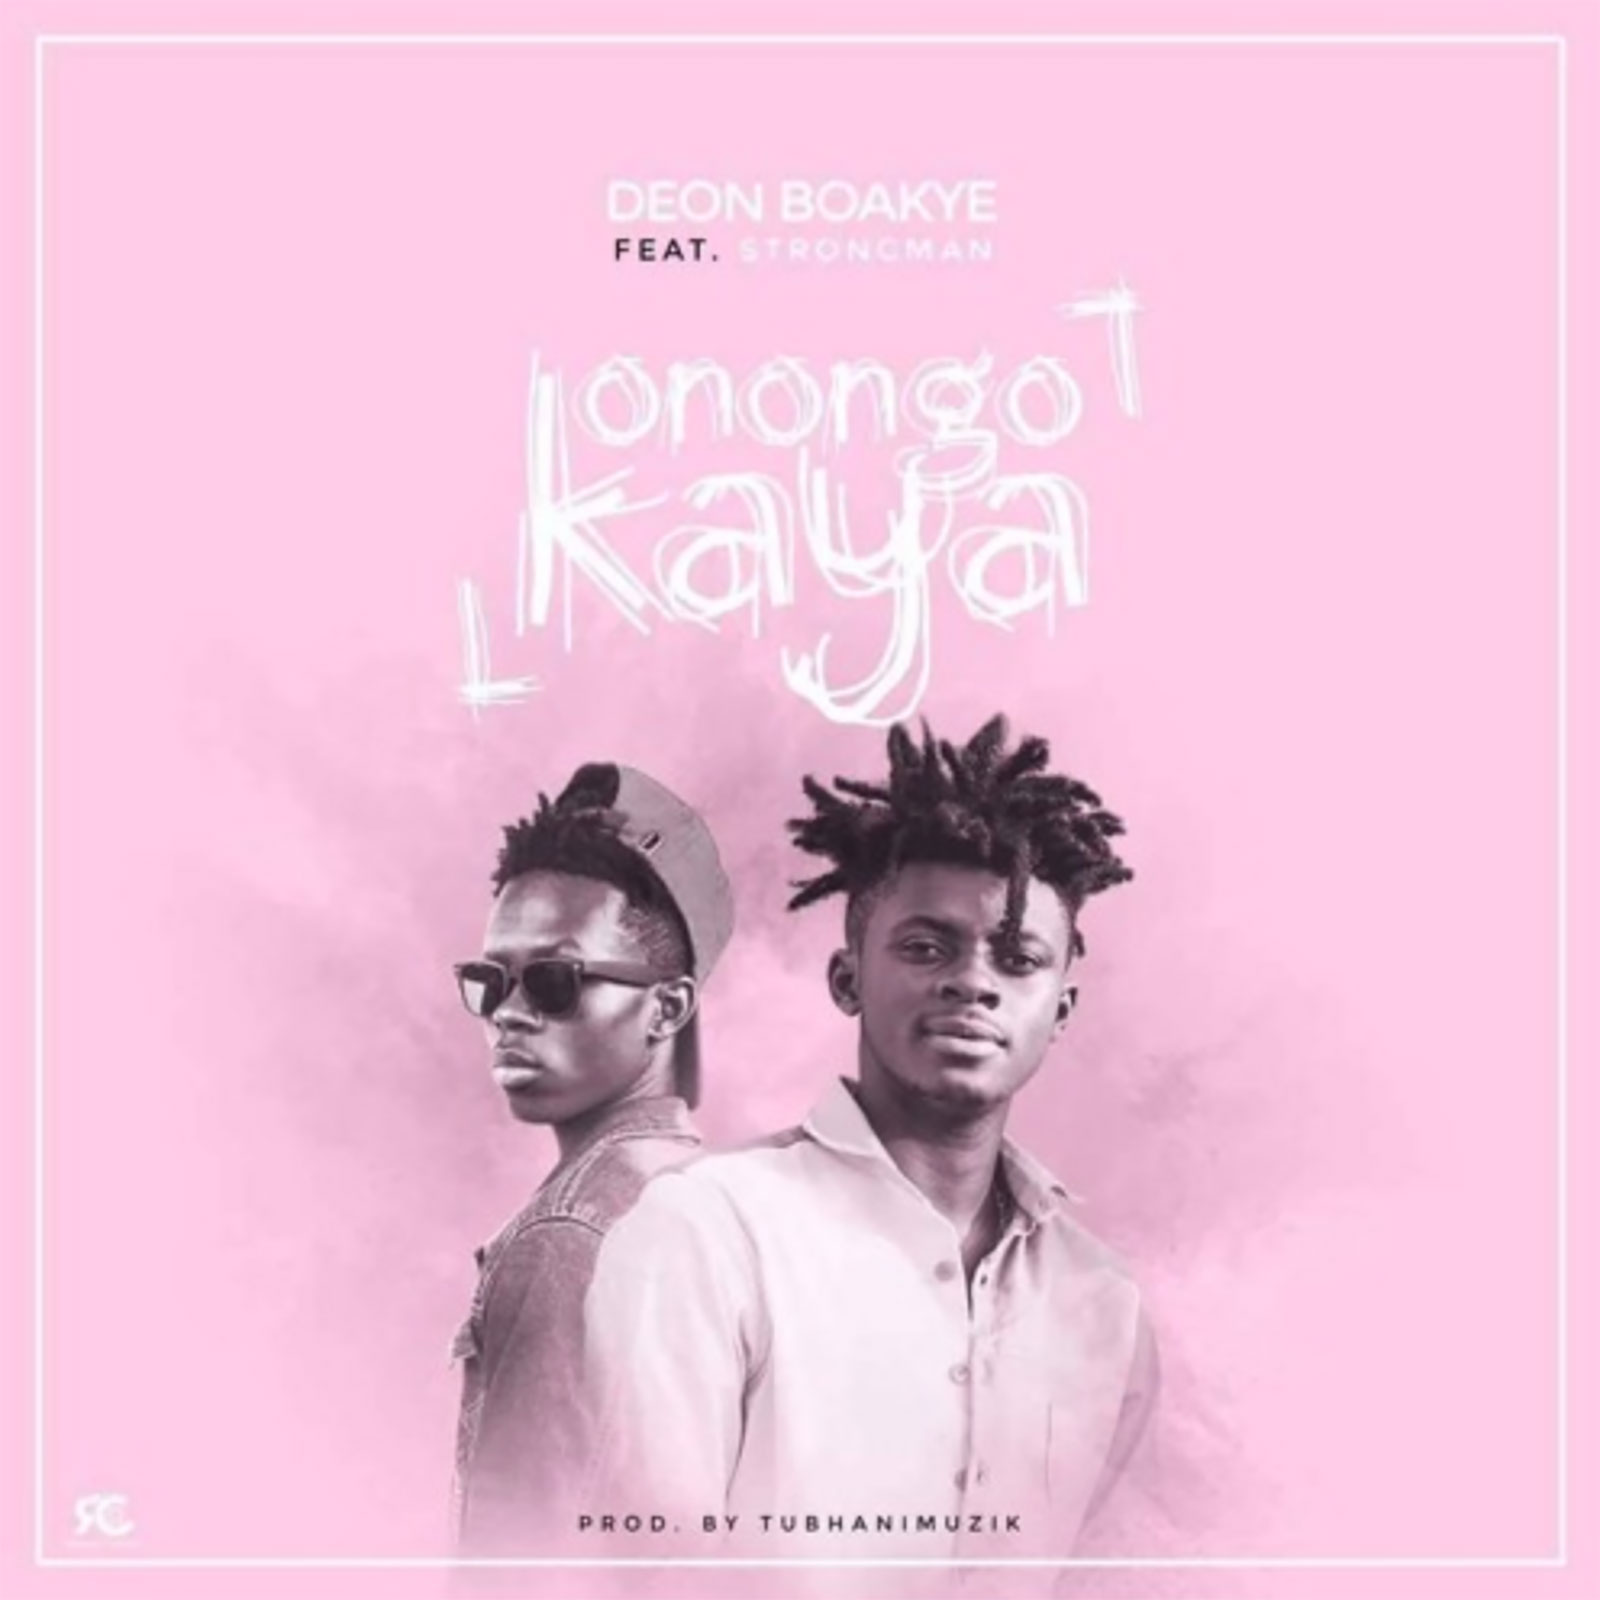 Konongo Kaya by Deon Boakye feat. Strongman